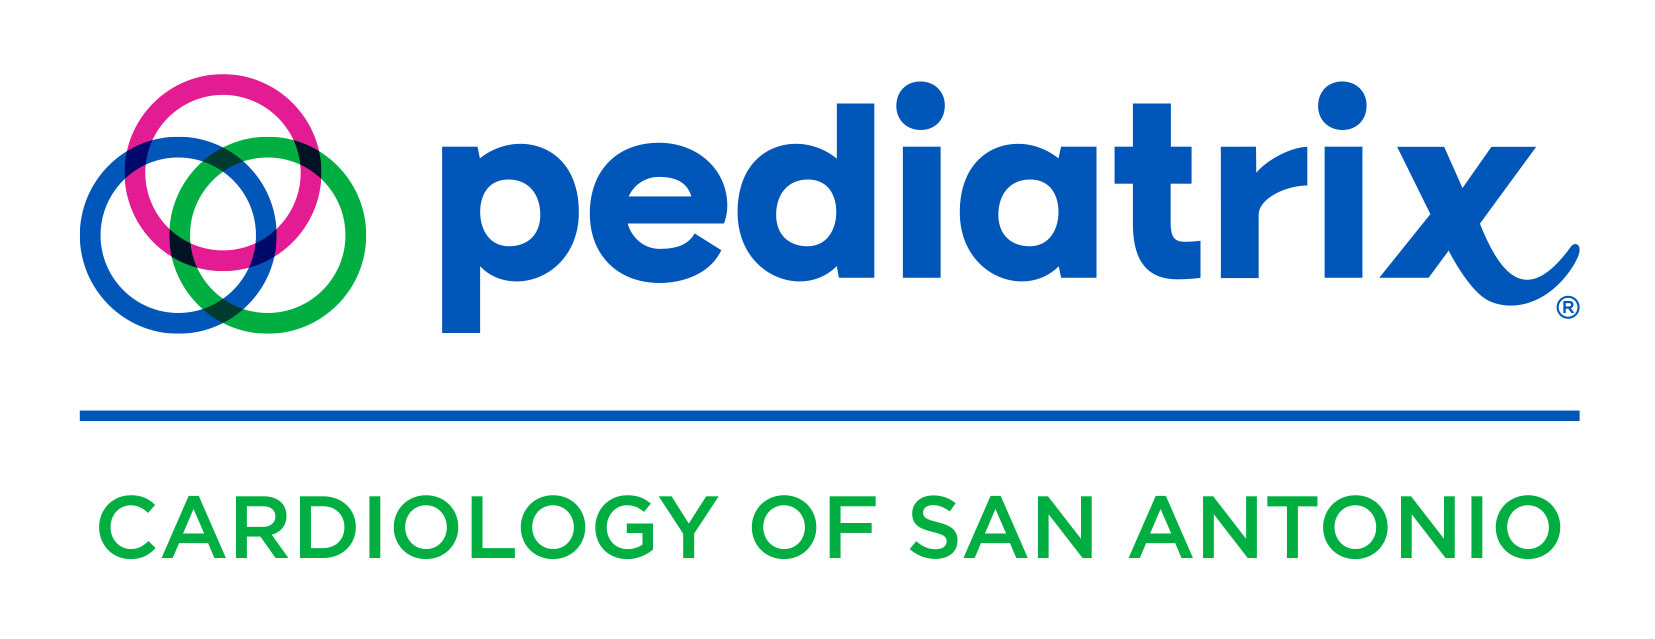 Pediatrix Cardiology Associates San Antonio